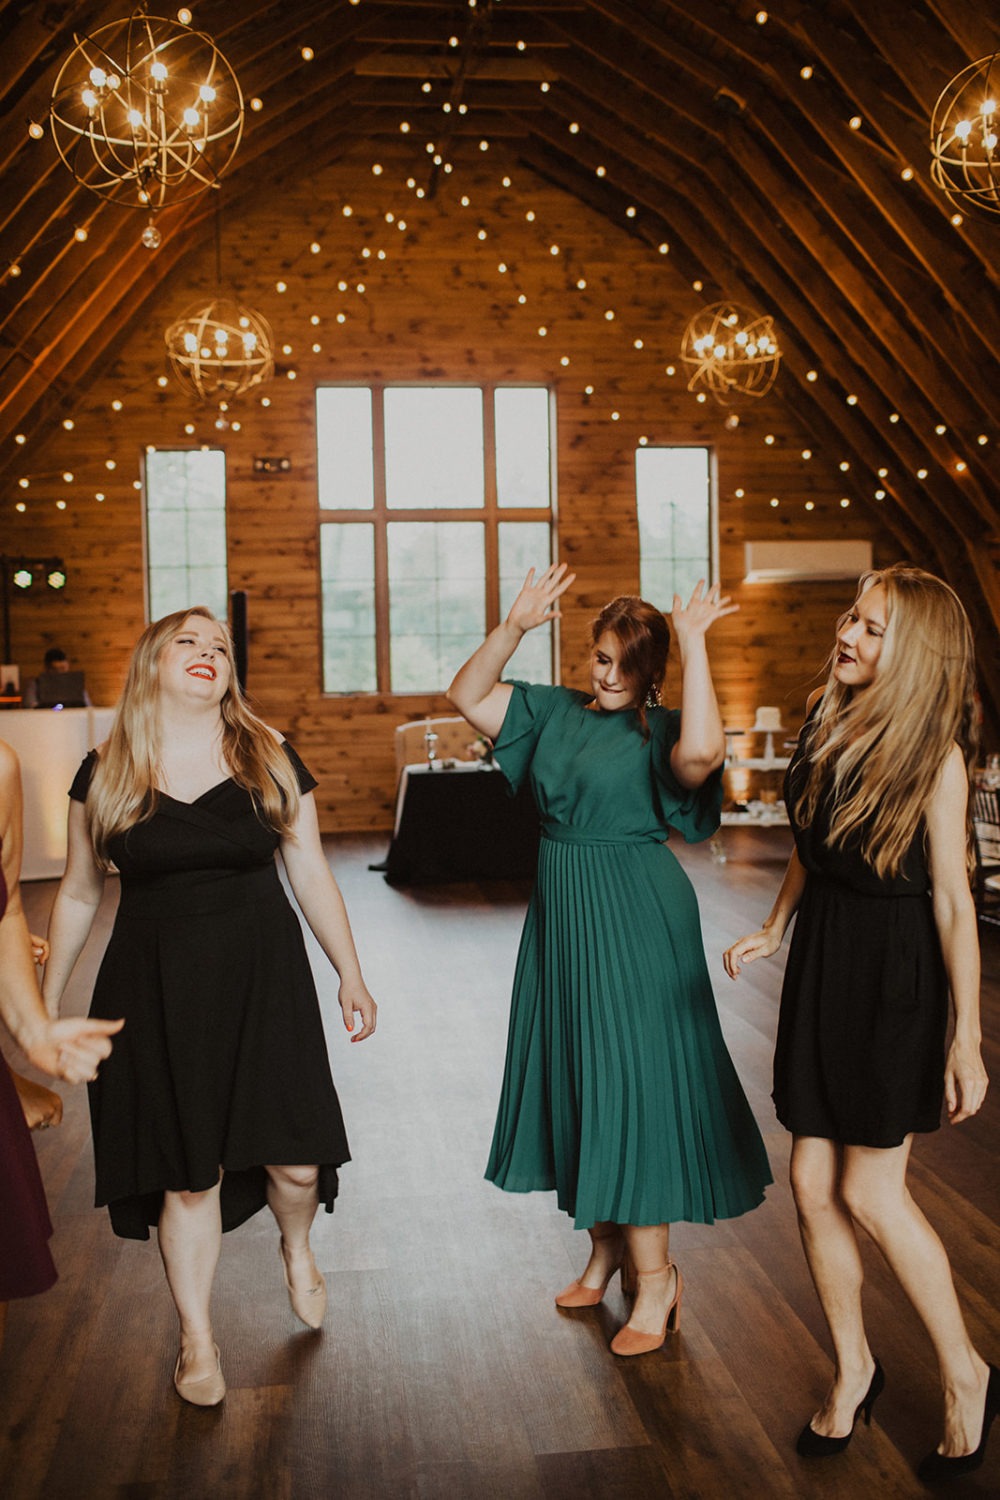 Guests dance in barn wedding reception lit by twinkle lights